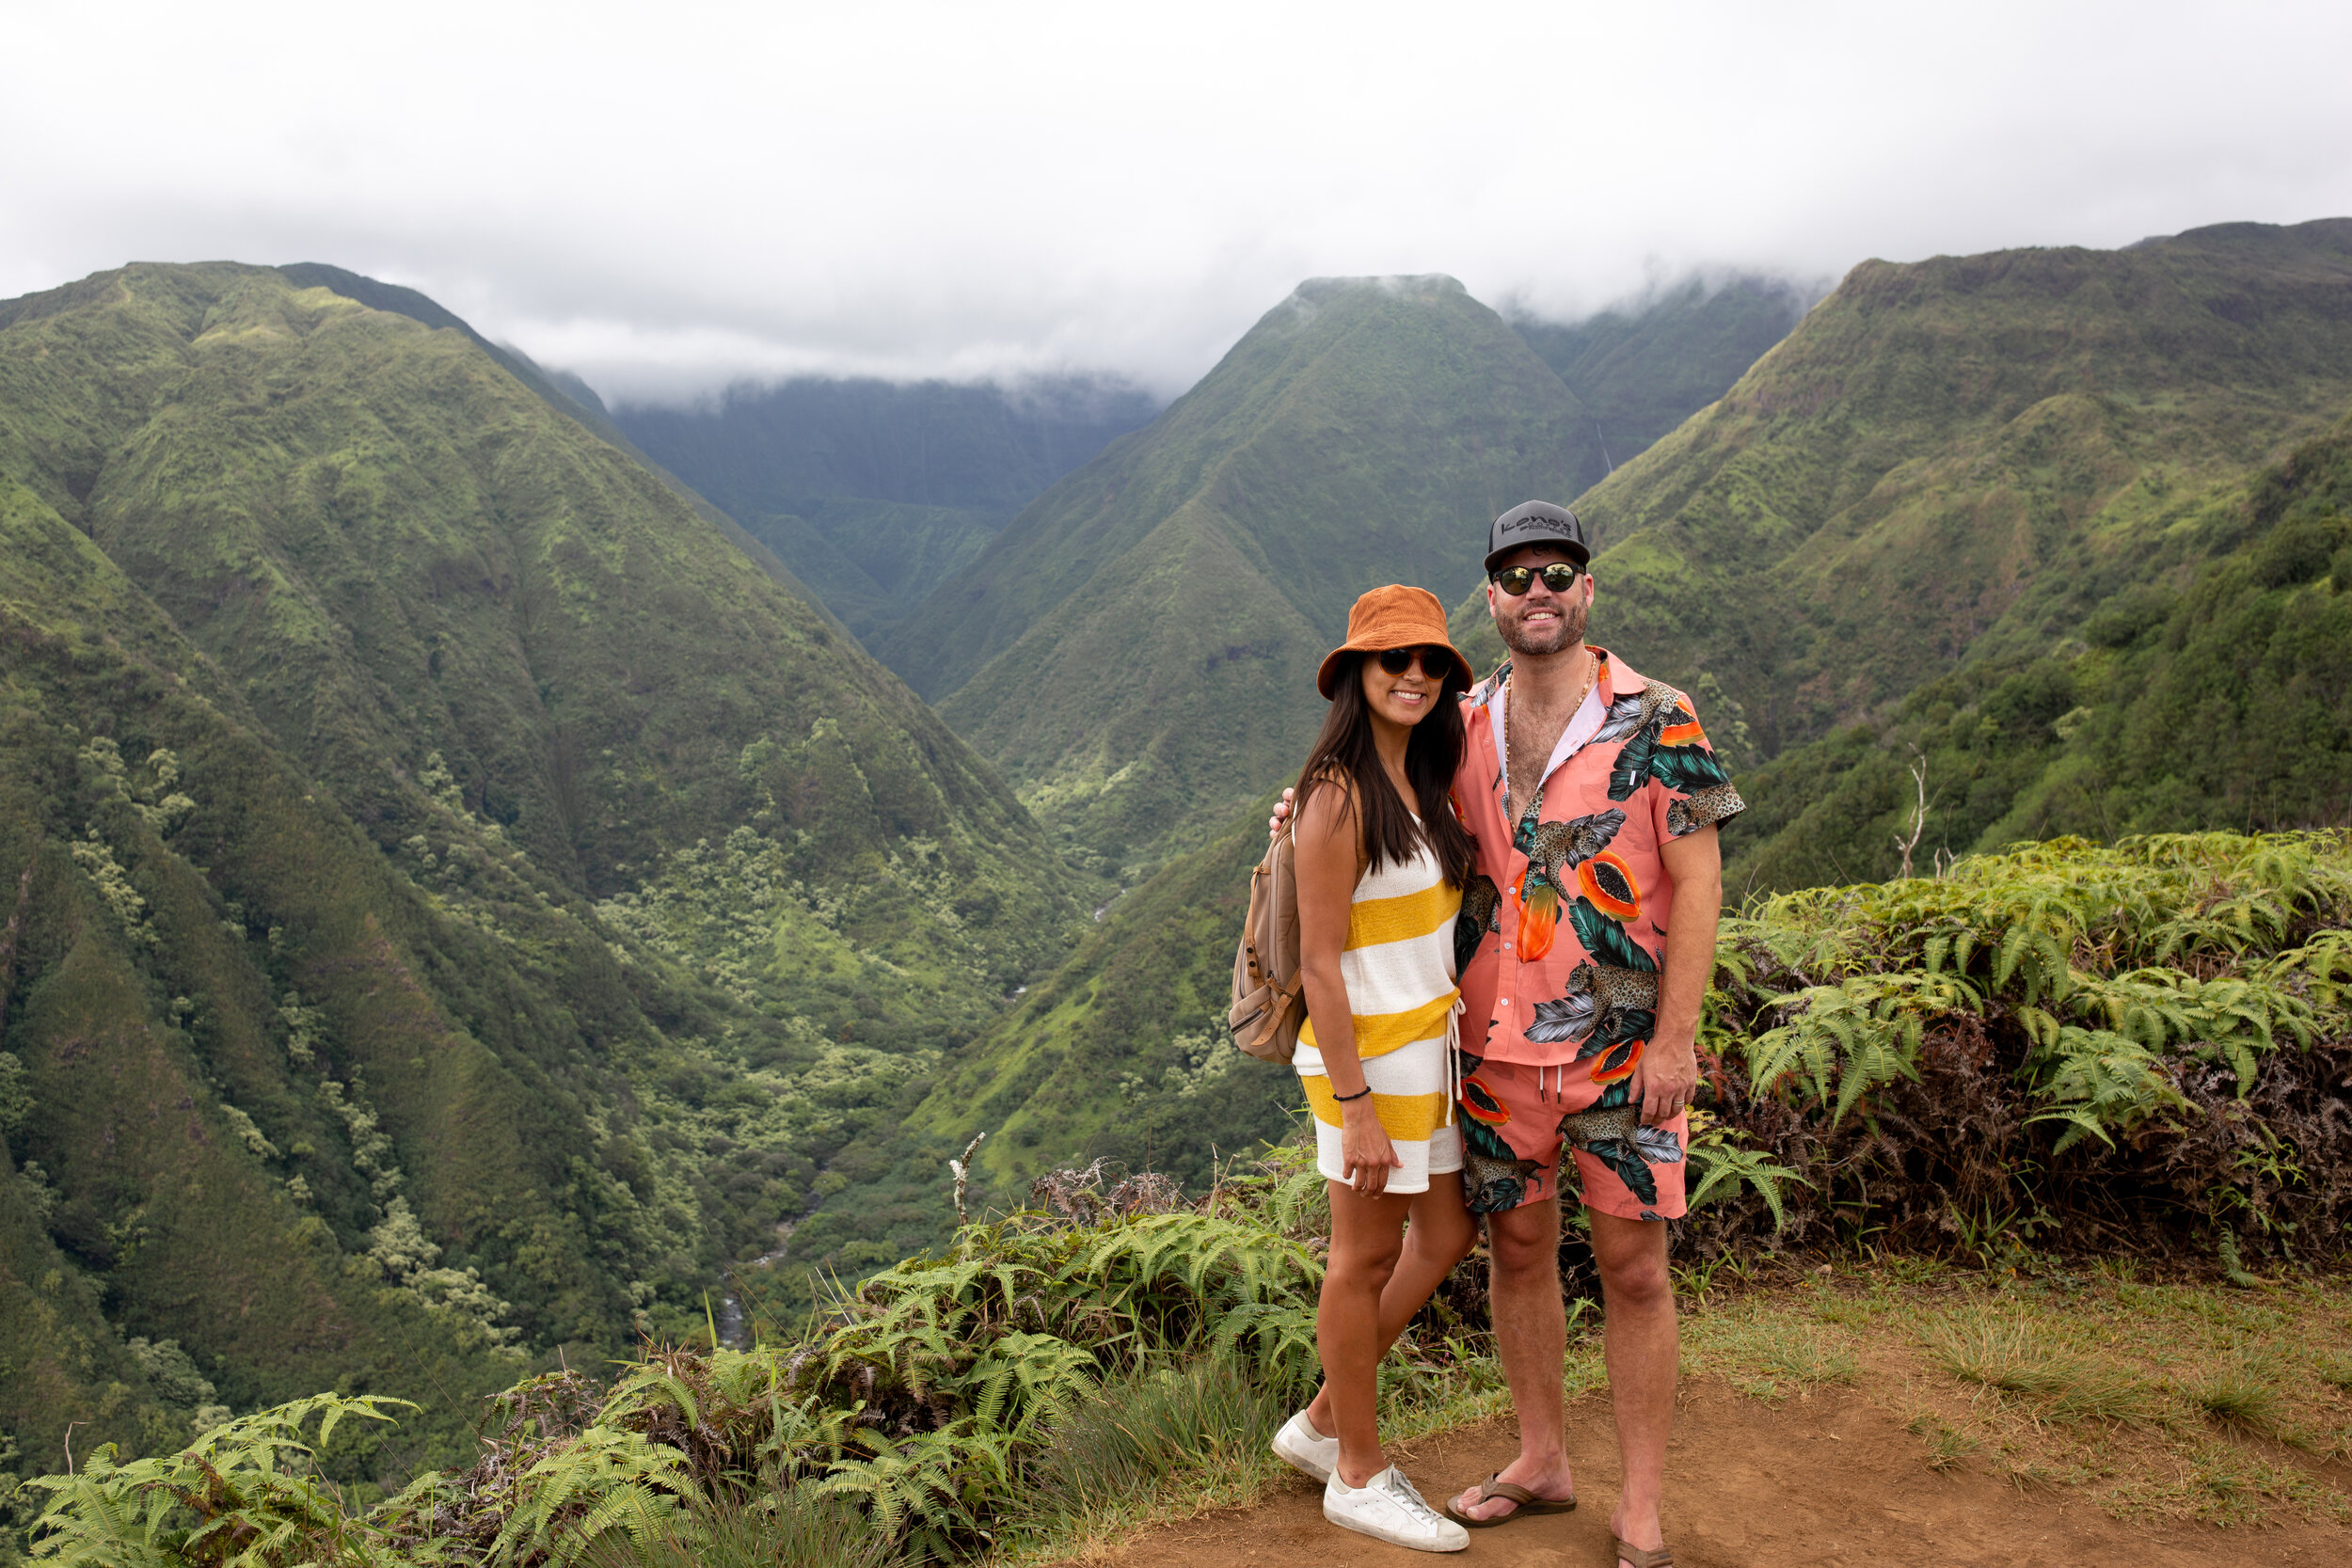 Hike the Lush Rainforest overlooking the ocean on Waihe’e Ridge Trail